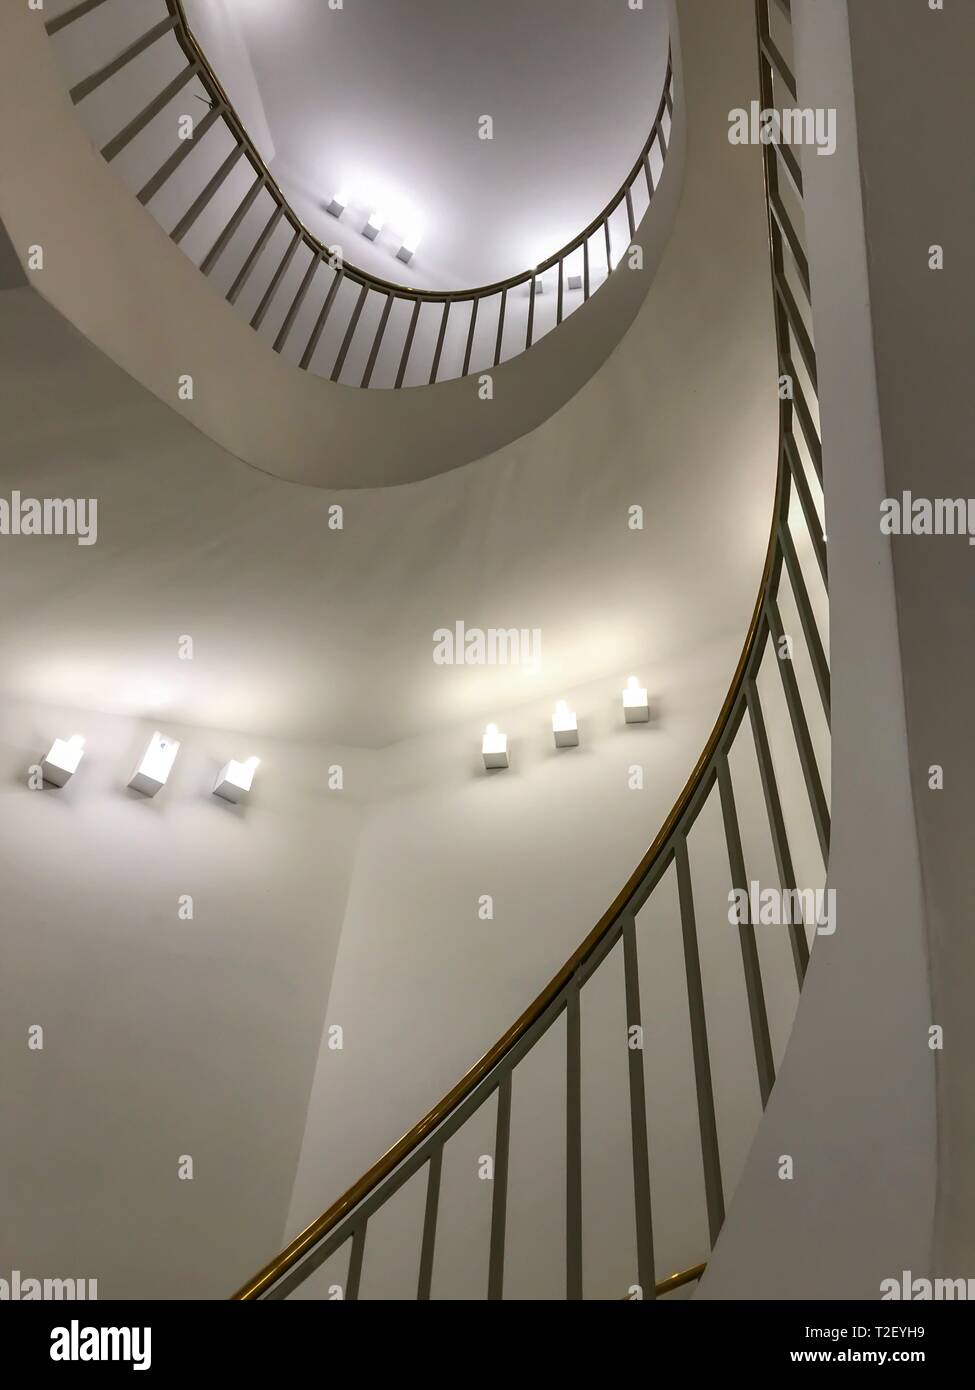 Iluminación de escaleras fotografías e imágenes de alta resolución - Alamy